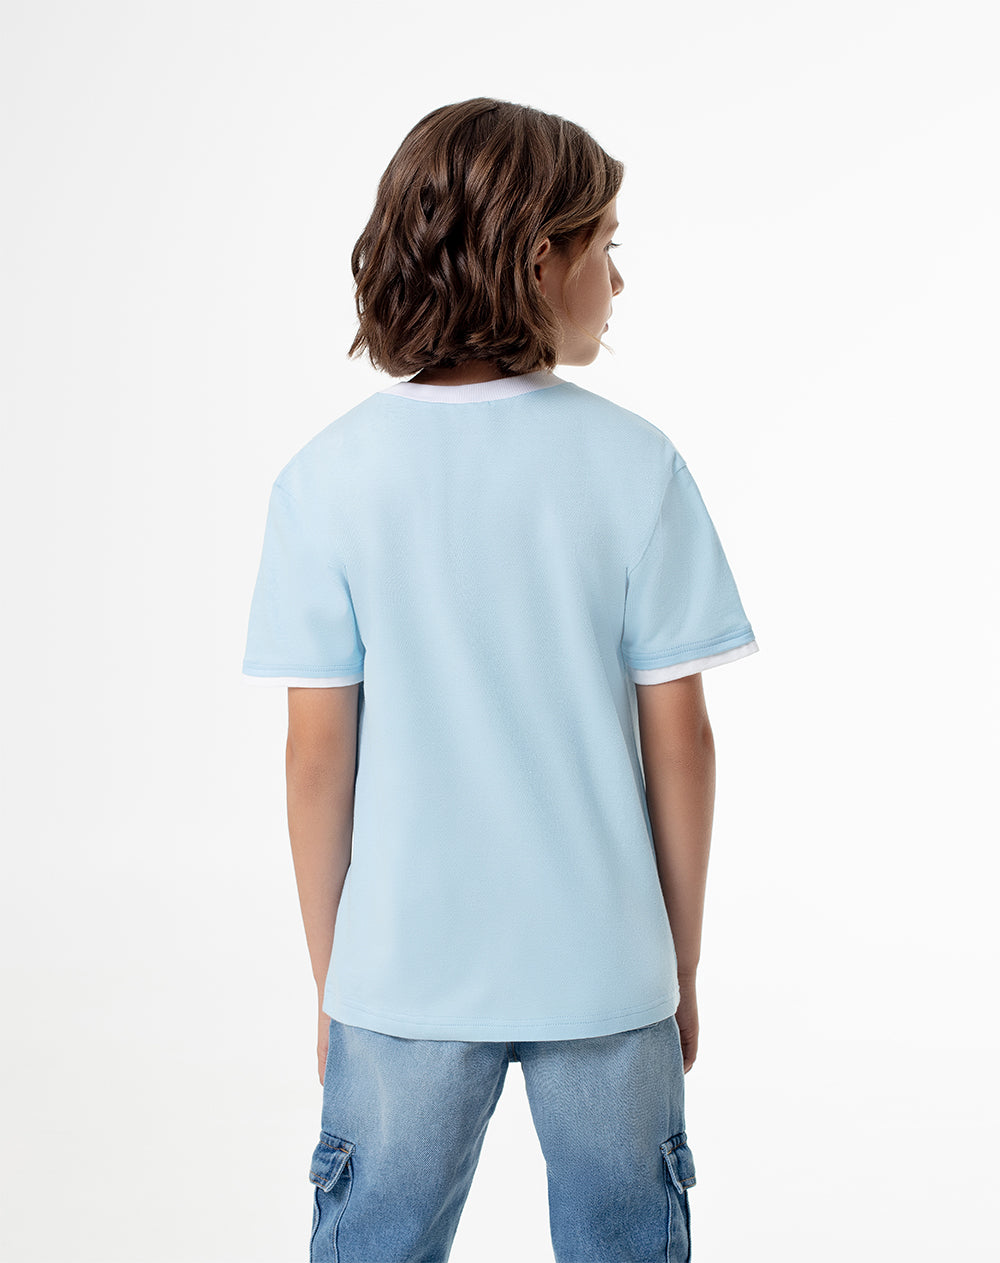 Camiseta fit manga corta azul